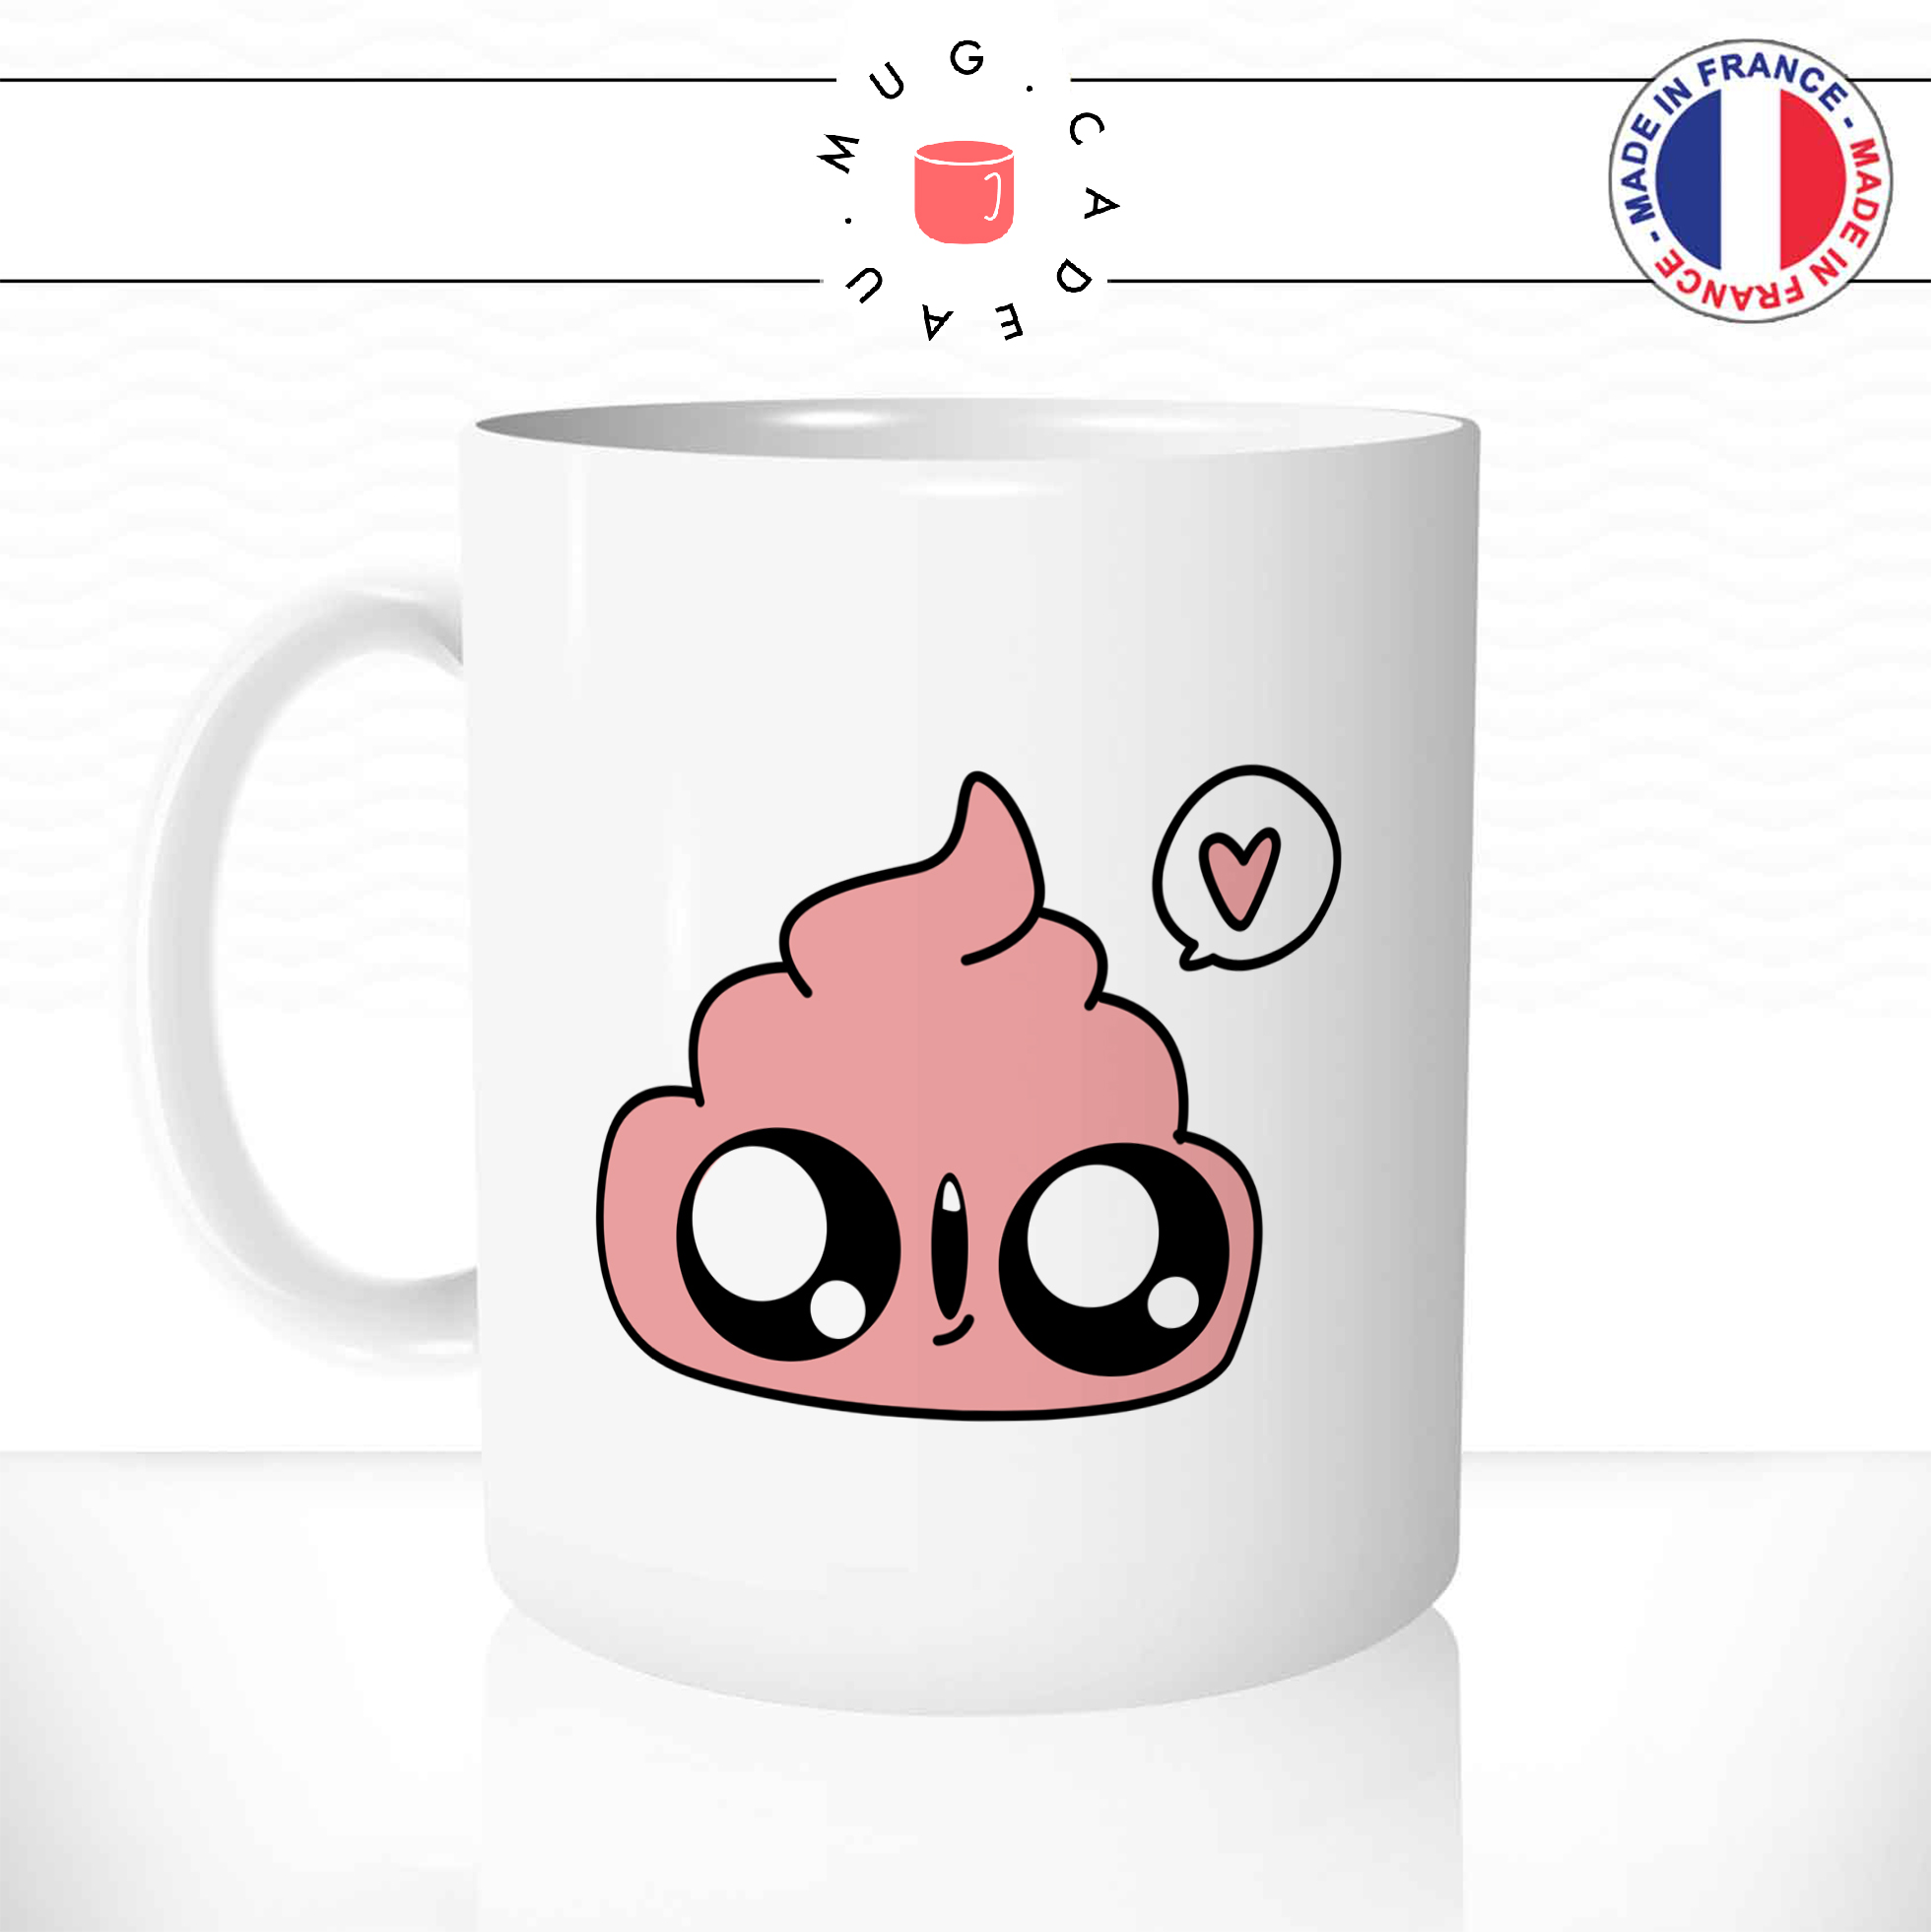 mug-tasse-ref13-drole-emoji-caca-crotte-rose-bulle-coeur-cafe-the-mugs-tasses-personnalise-anse-gauche